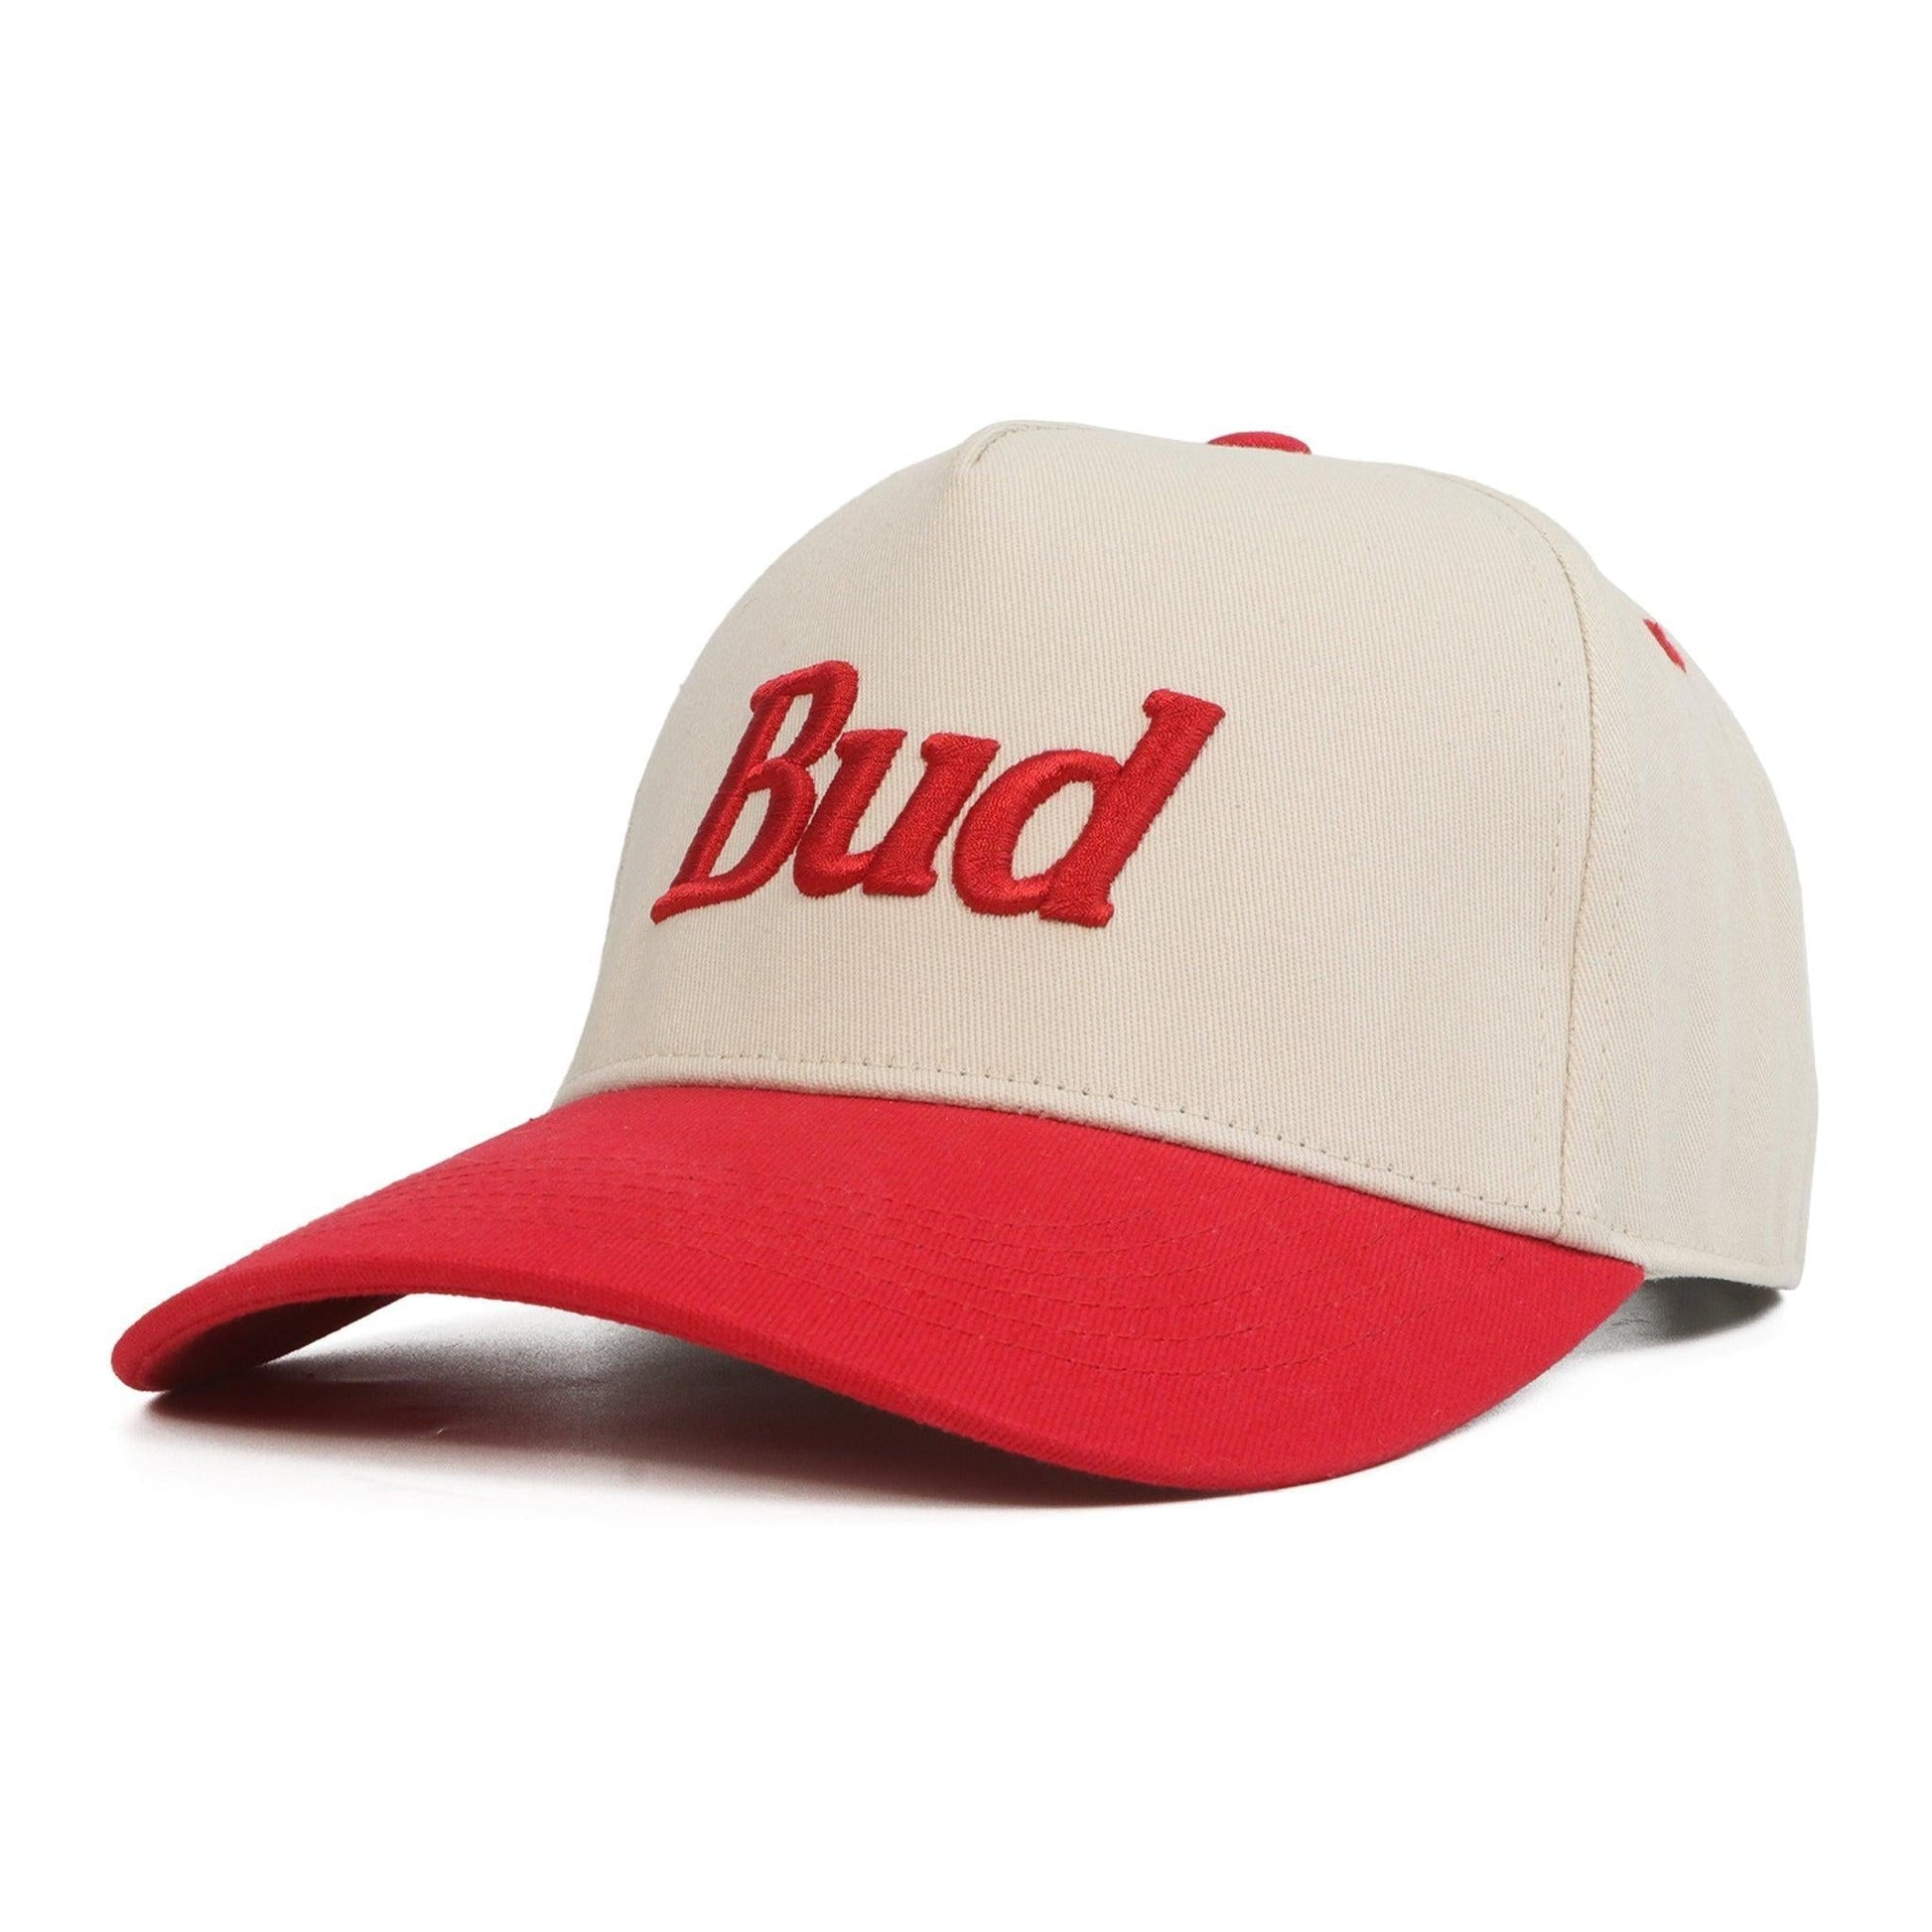 budweiser vintage baseball hat